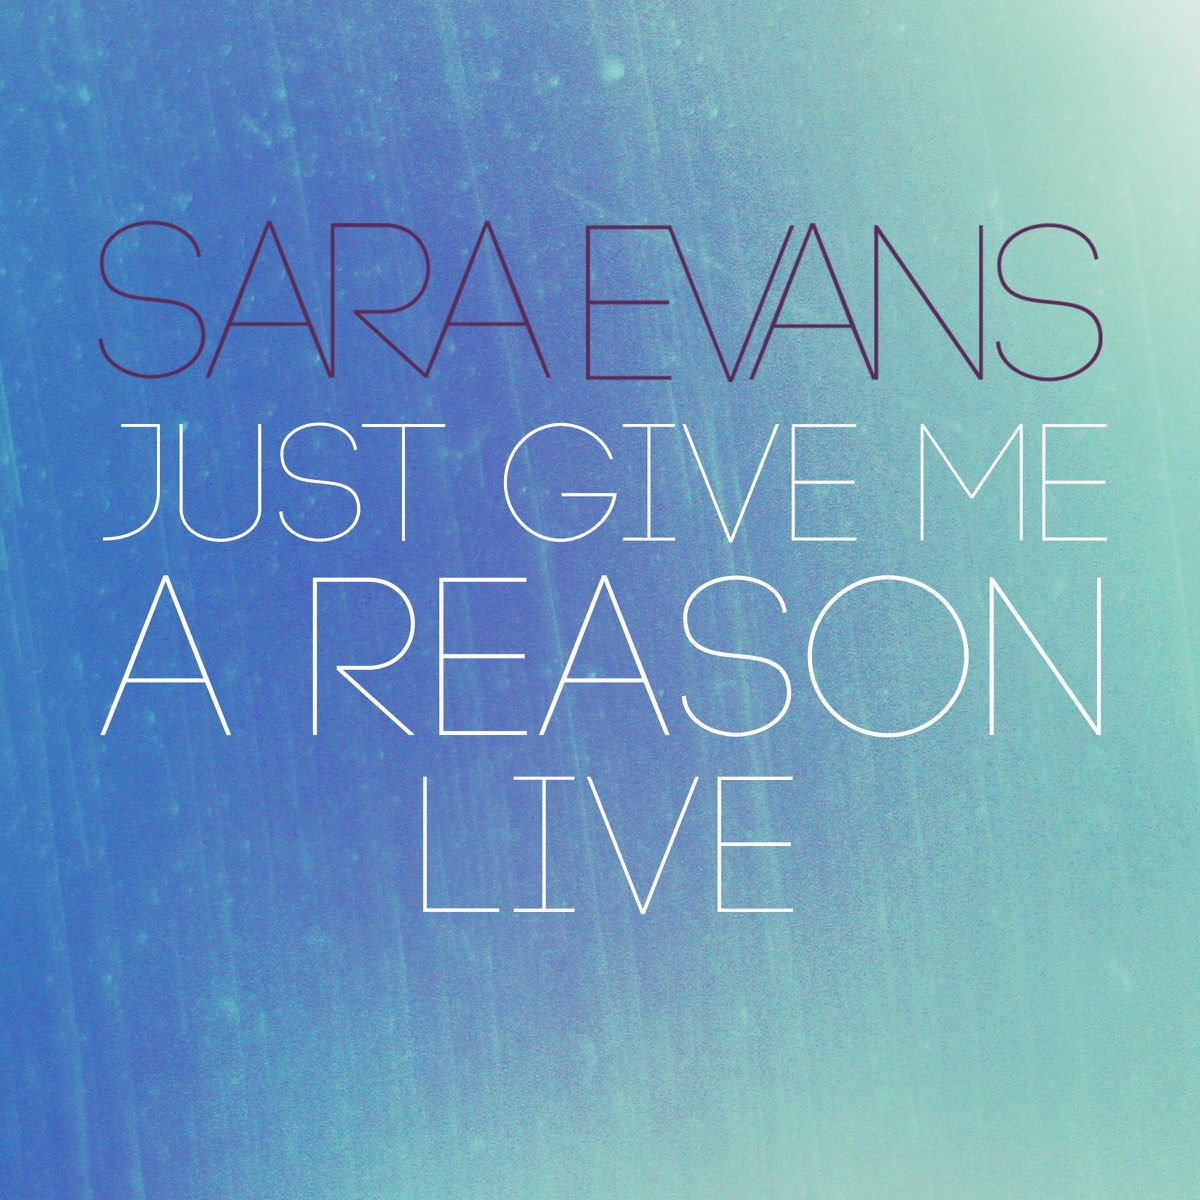 Песня give me reason